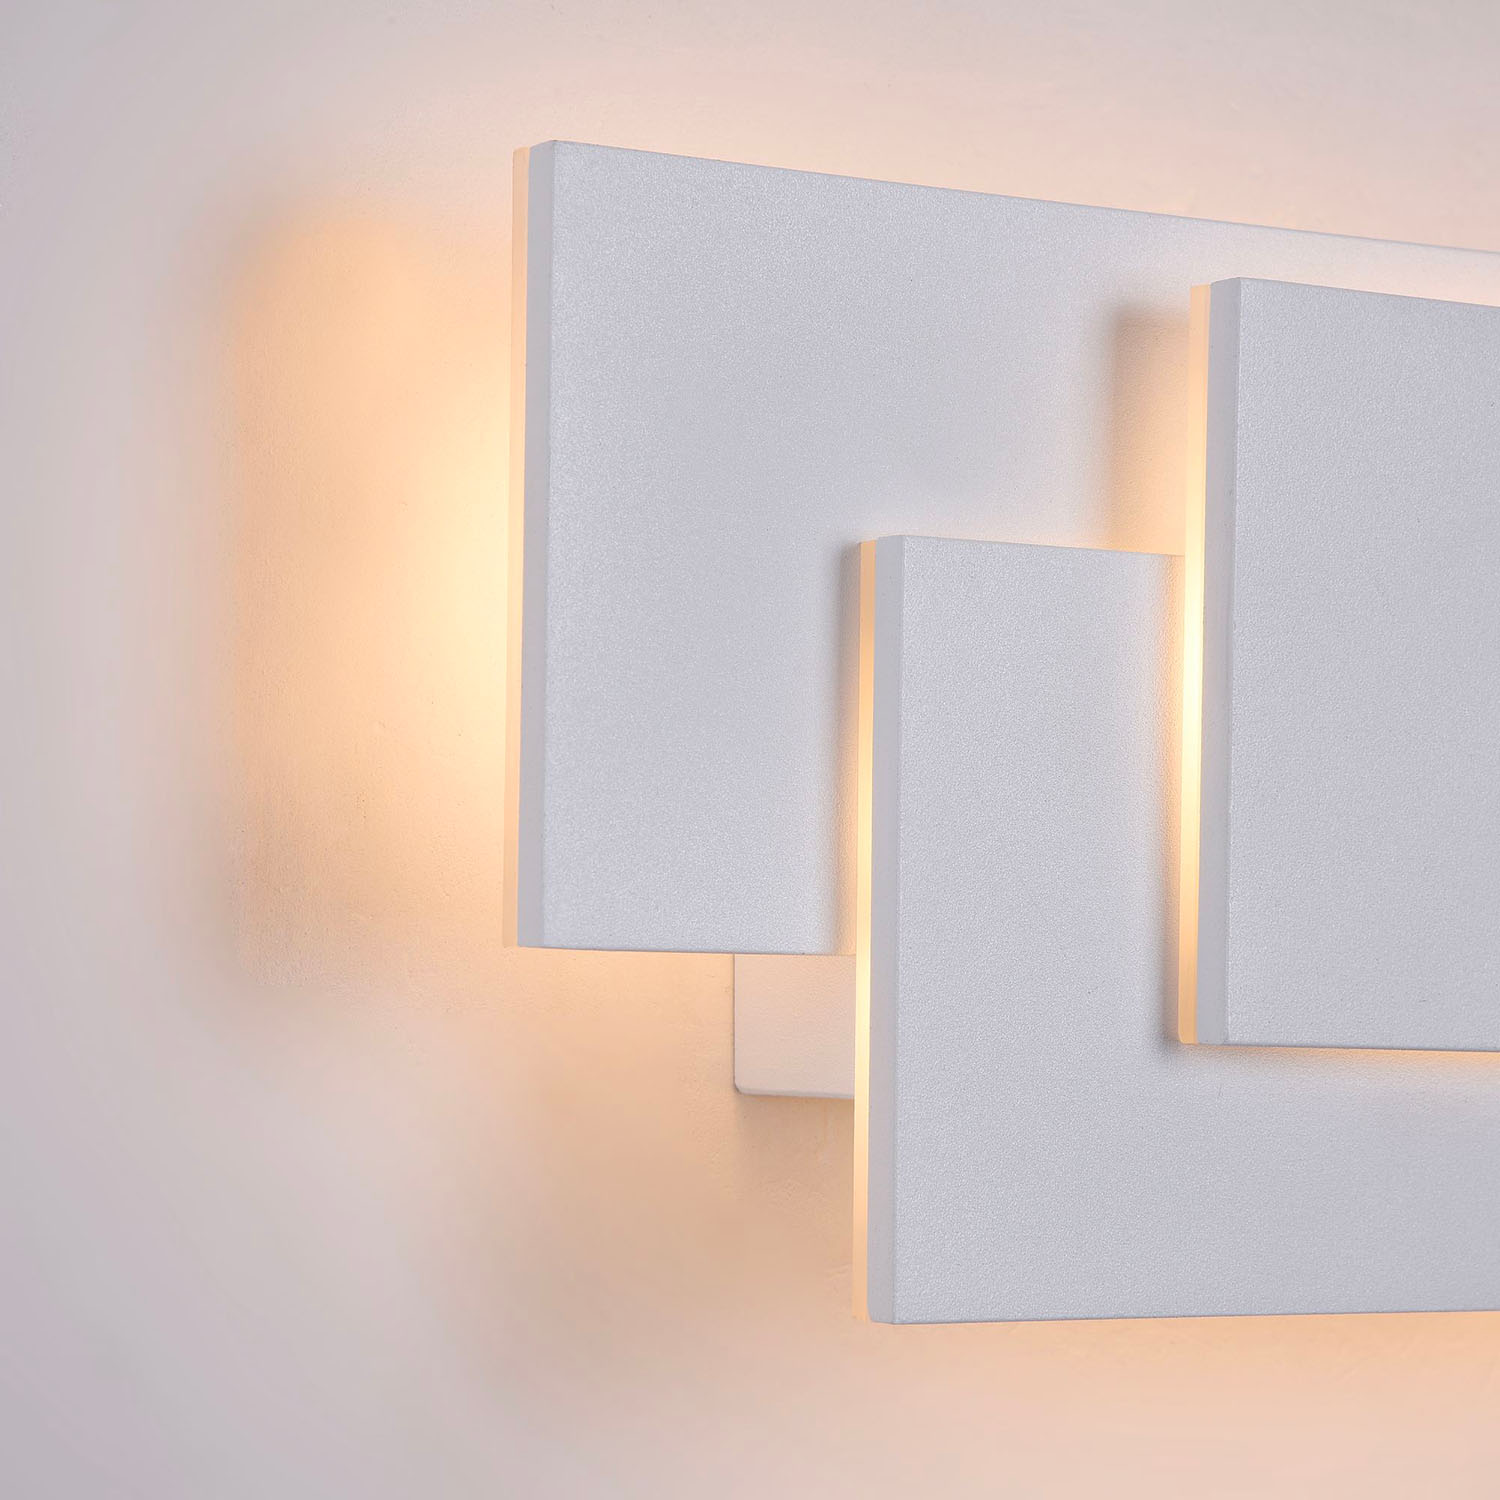 TRAME - White steel geometric design wall light